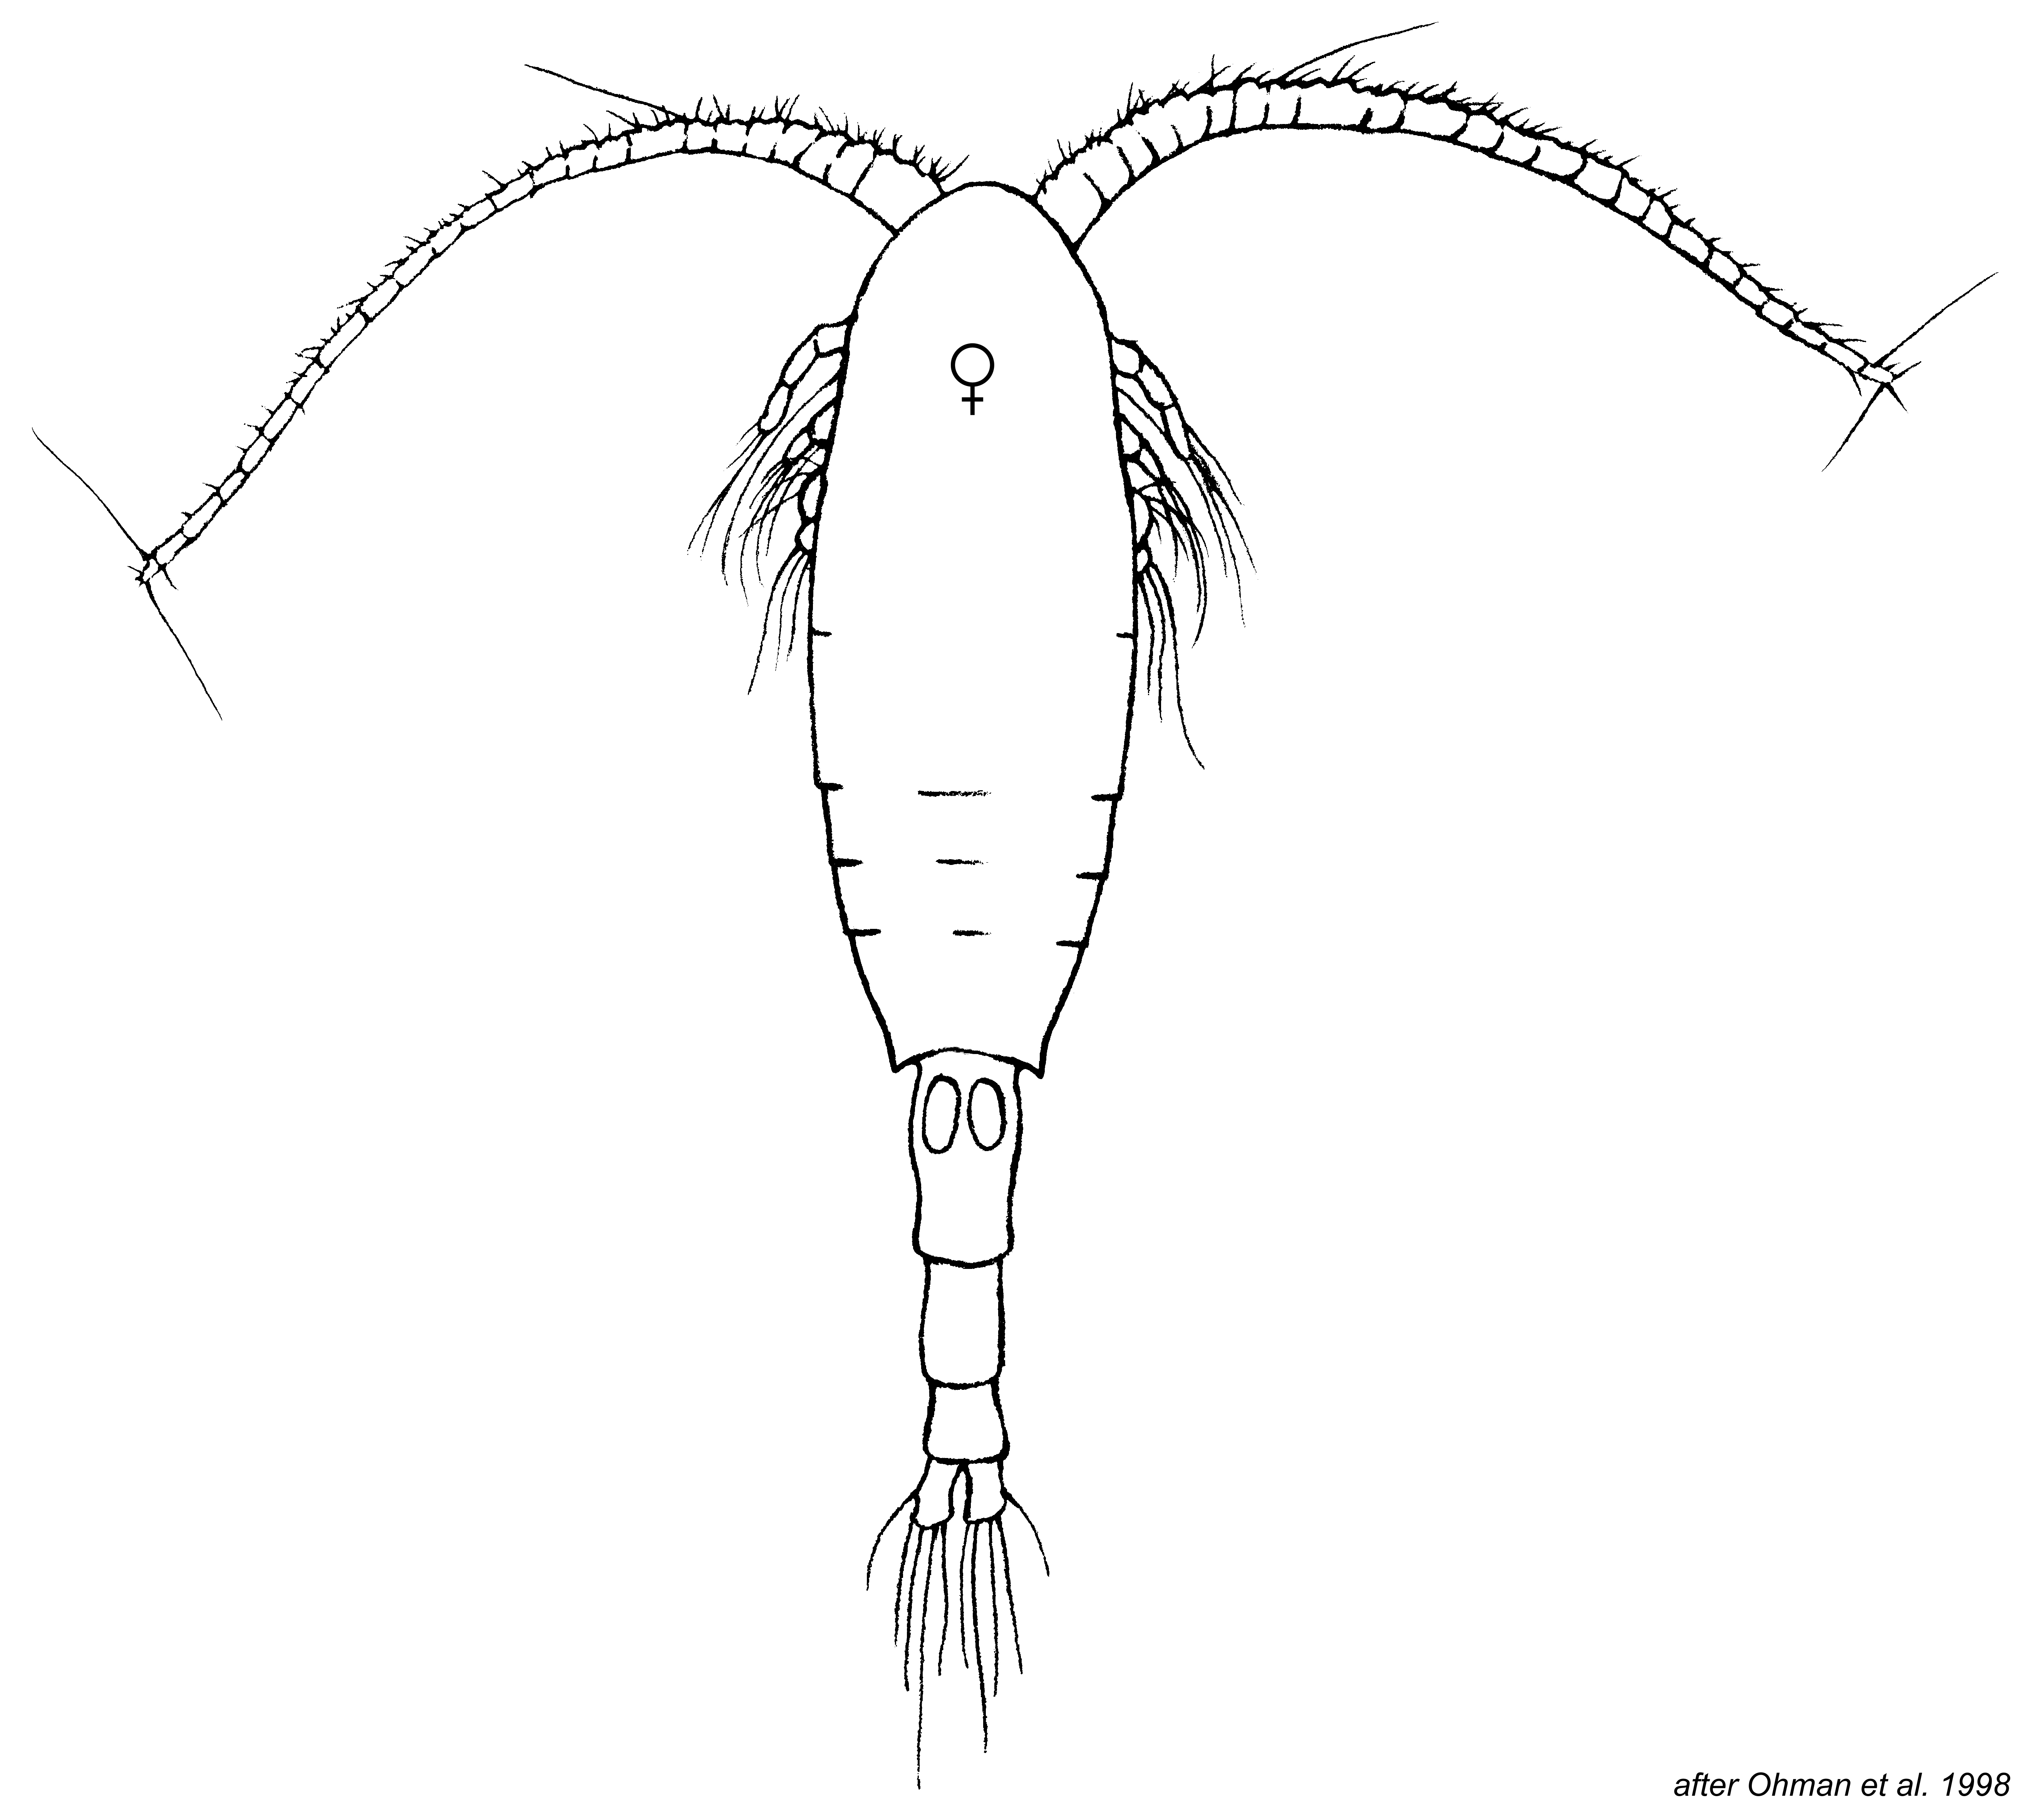 Metridia cf. pacifica Zooplankton Guide